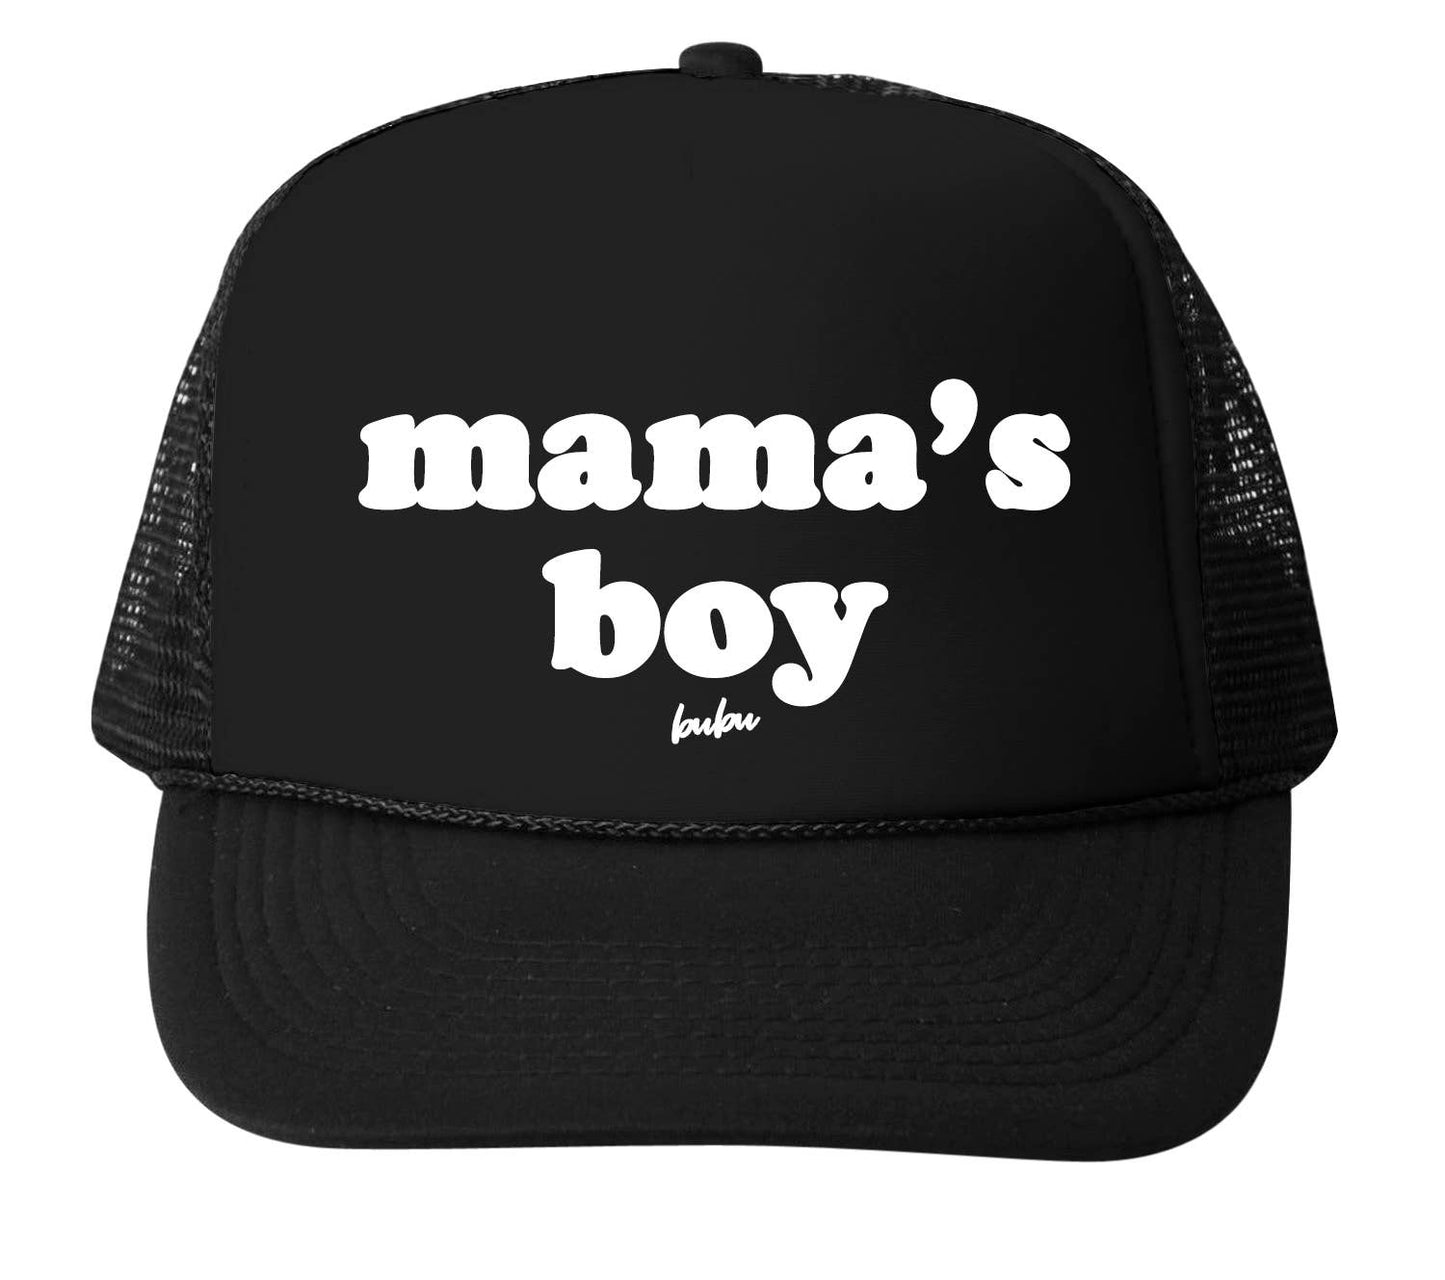 Bubu mama's boy trucker hat